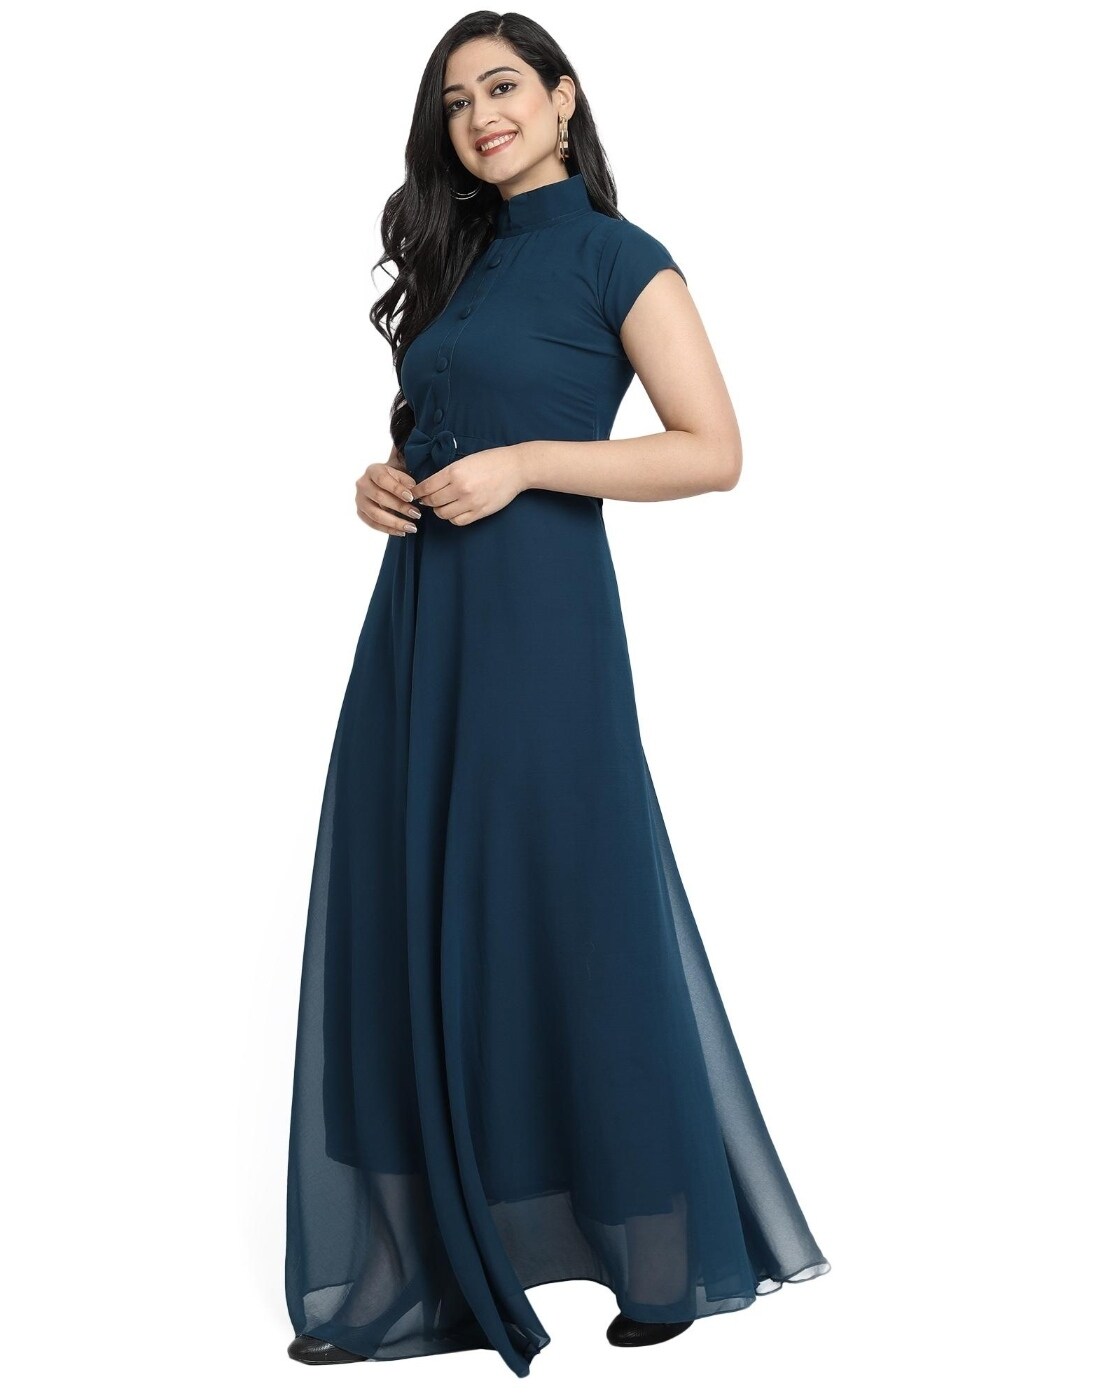 Blue Color Net Designer Party Wear Gown Dress - 2869142866 | Heenastyle